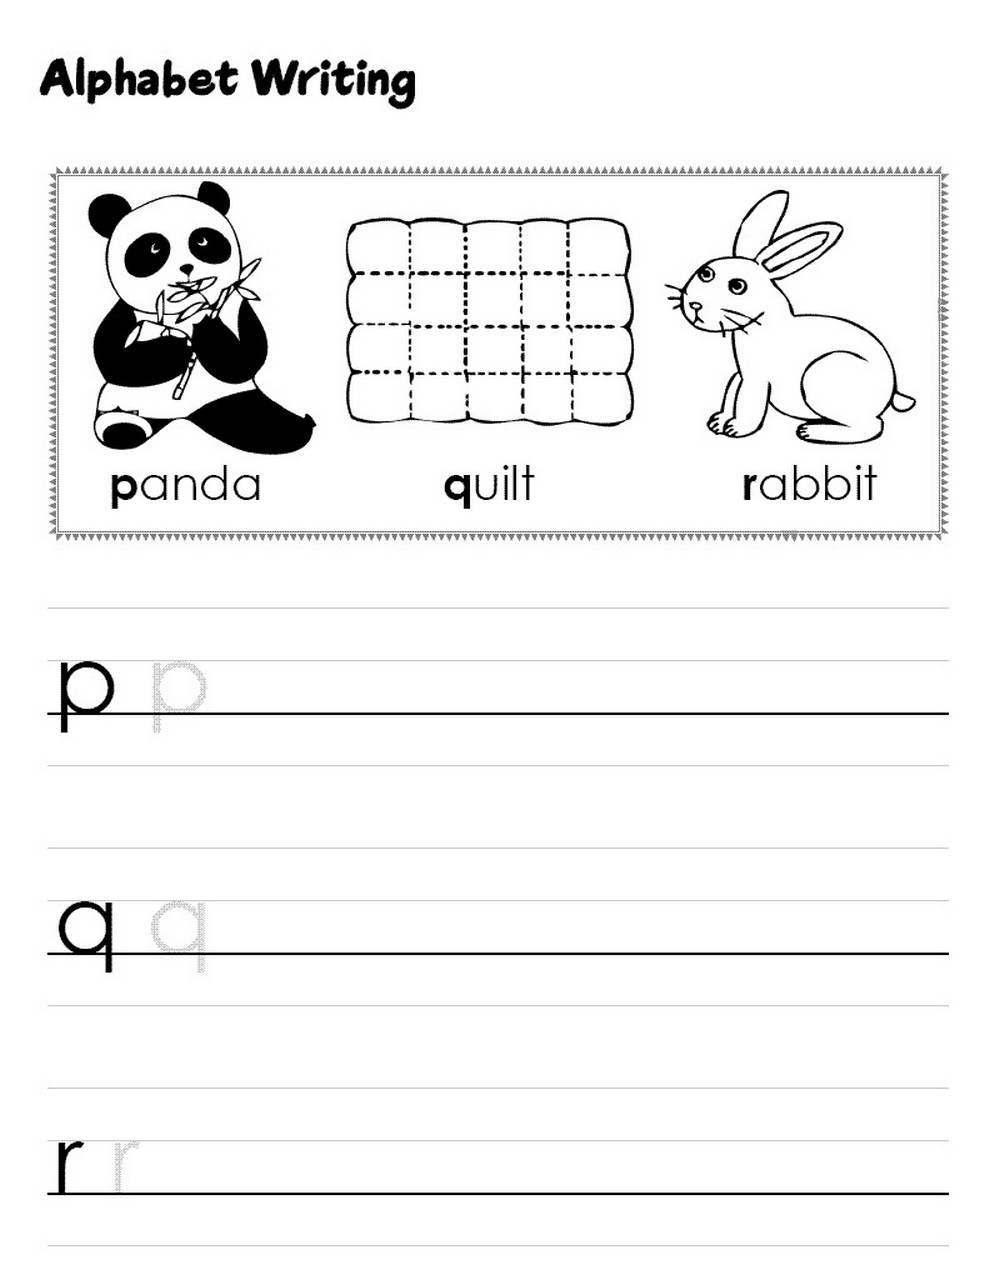 practicing the alphabet for preschooler fun